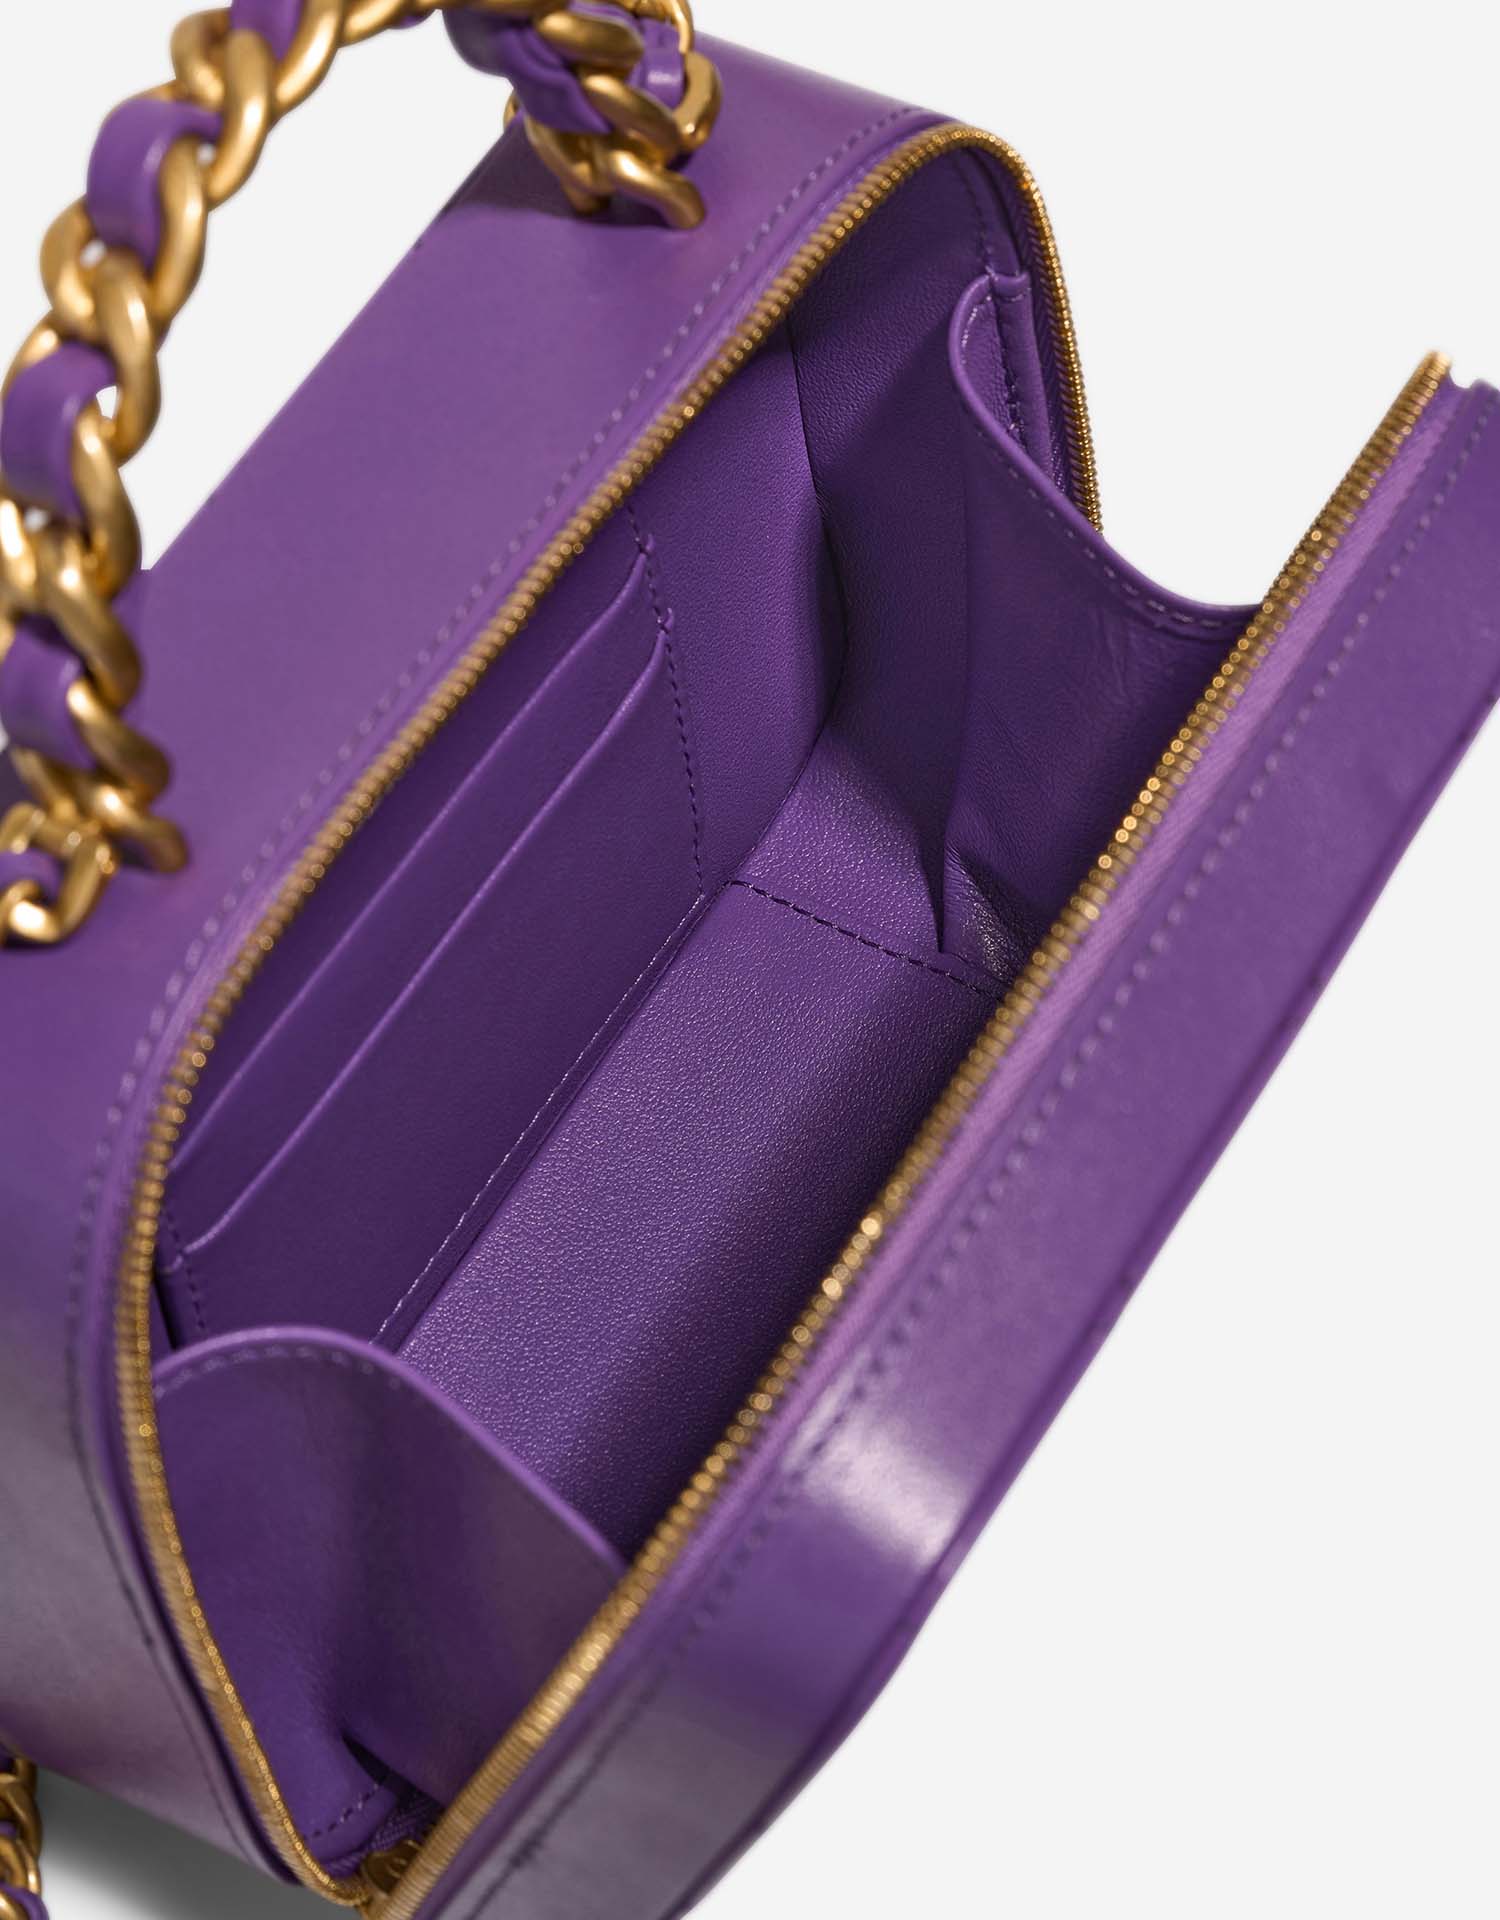 Chanel Vanity Small Violet Inside  | Sell your designer bag on Saclab.com